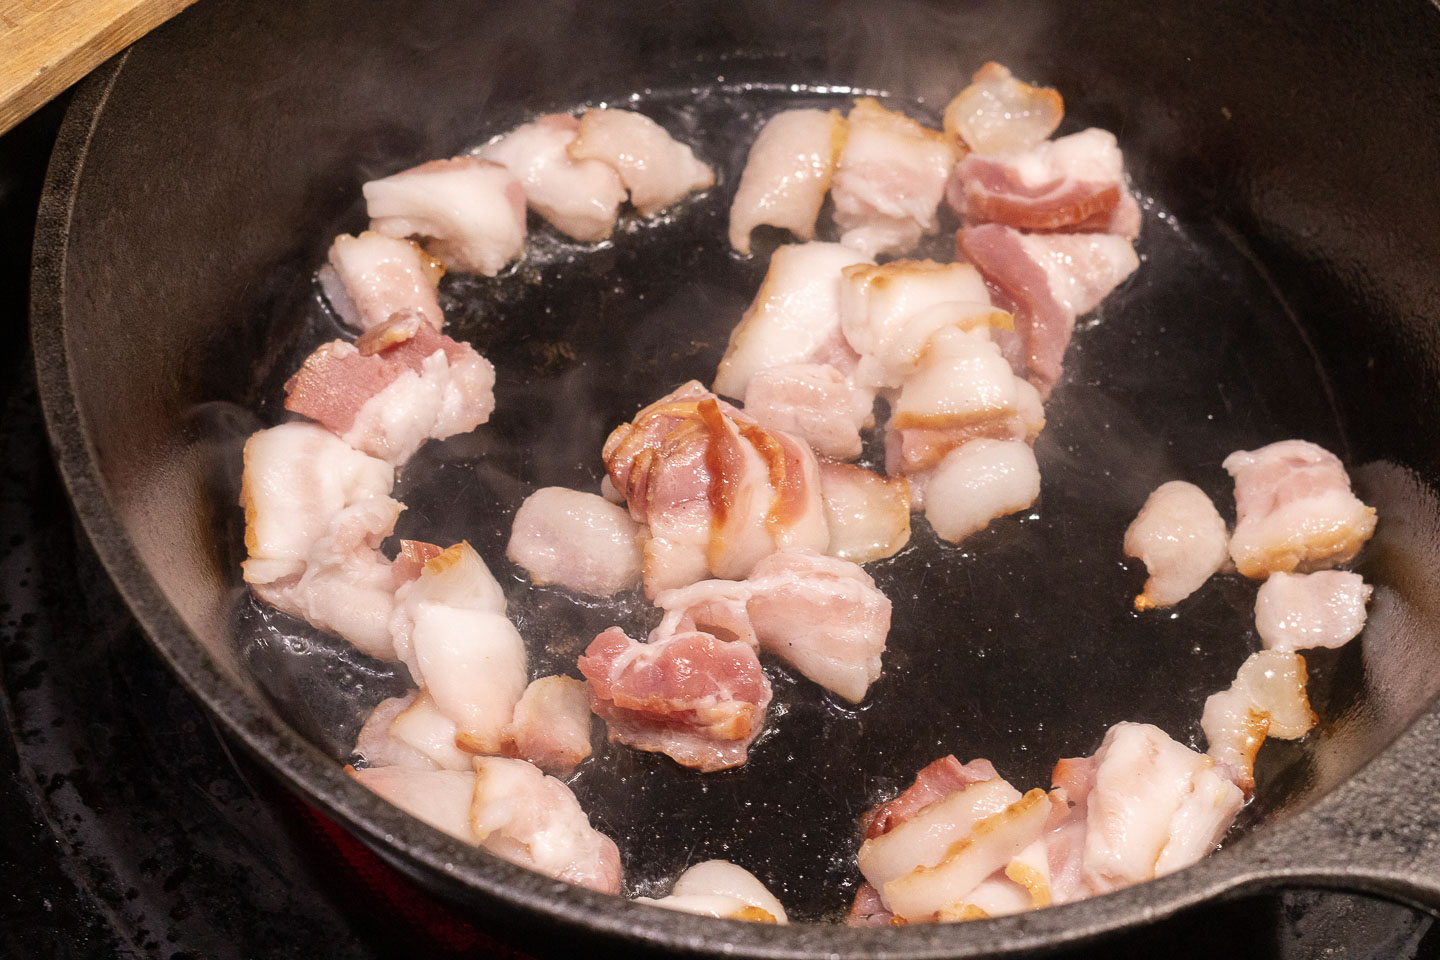 cut up bacon in a frying pan